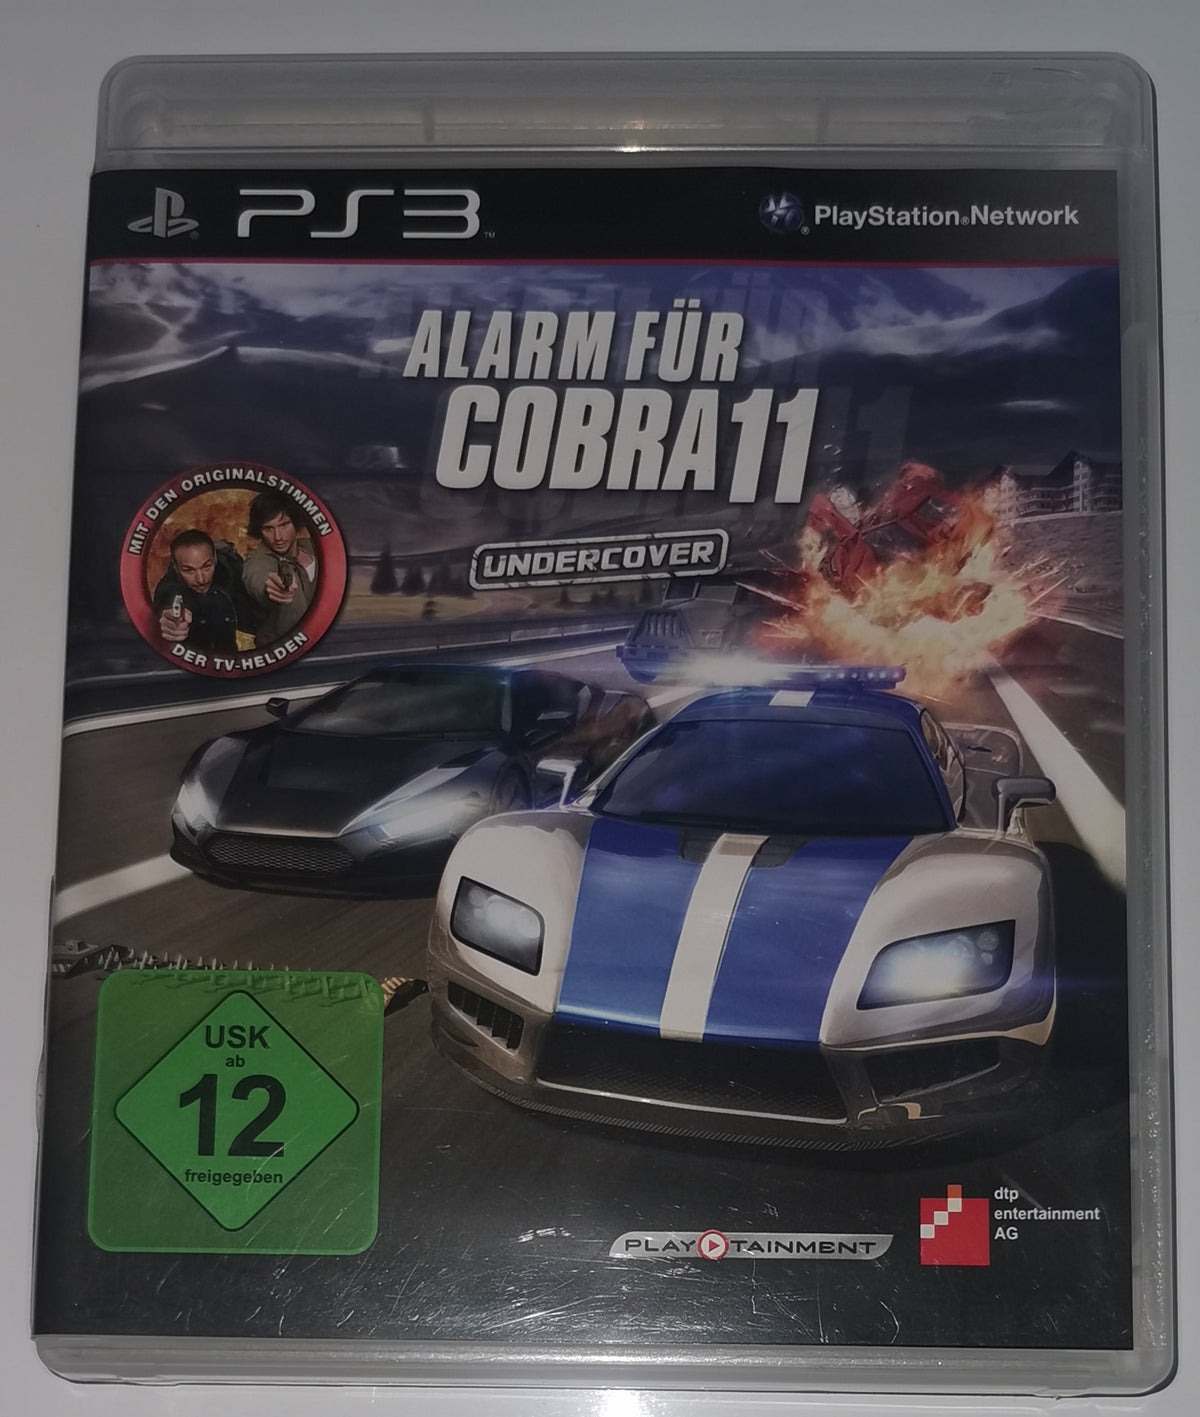 Alarm fuer Cobra 11 Undercover (Playstation 3) [Gut]